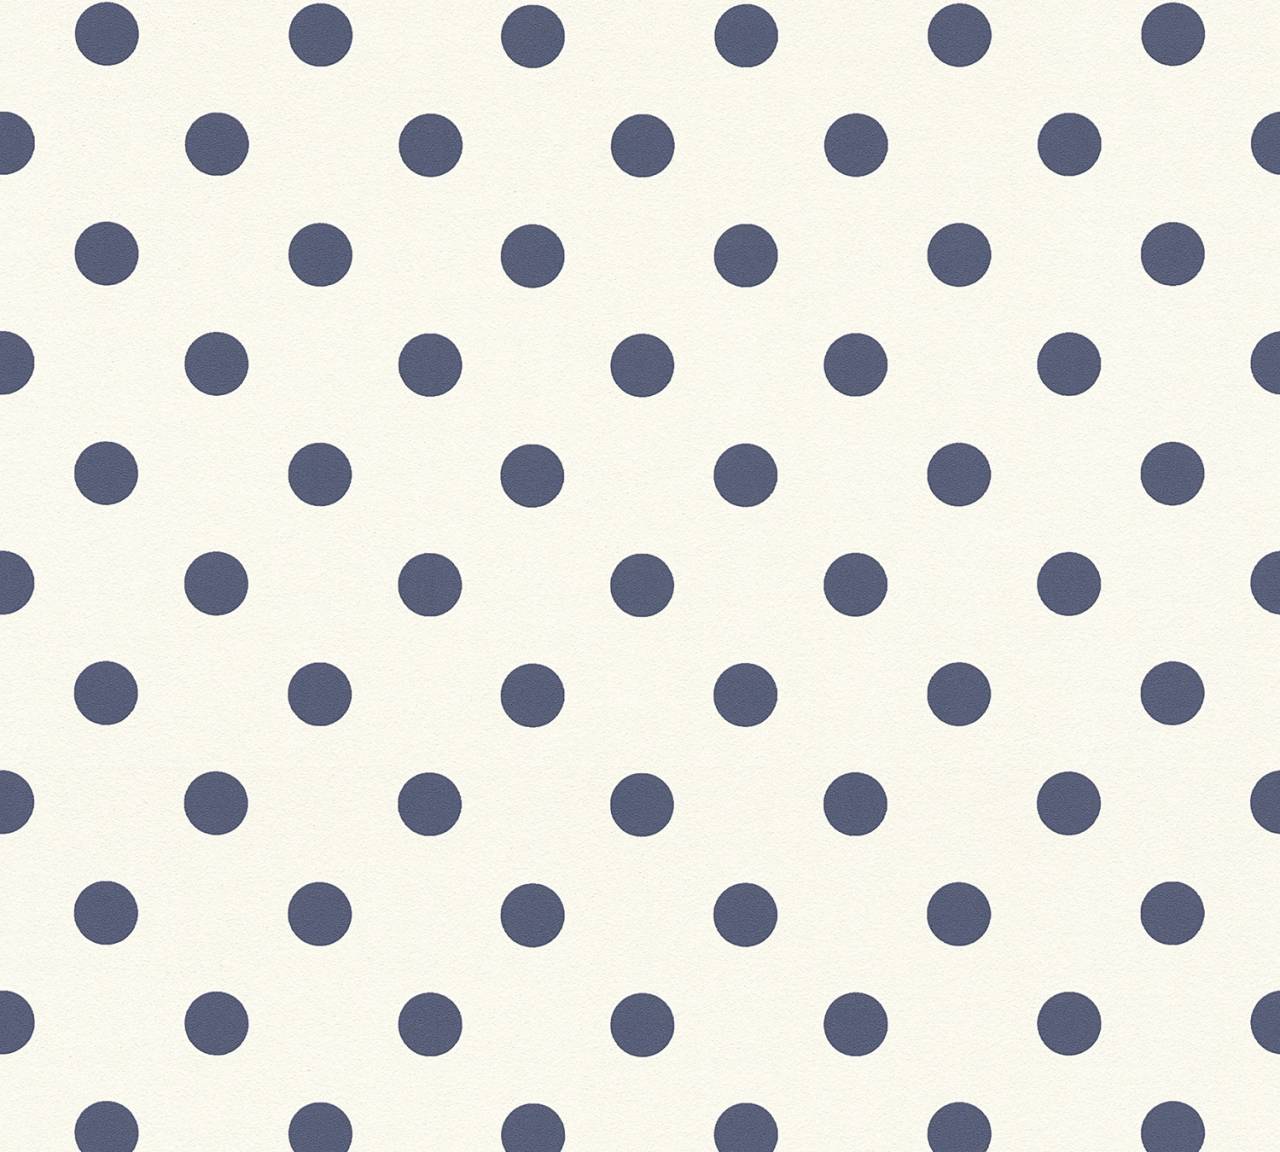 Thomas Non-Woven Wallpaper Dots White/Blue Tlt024 - 363367